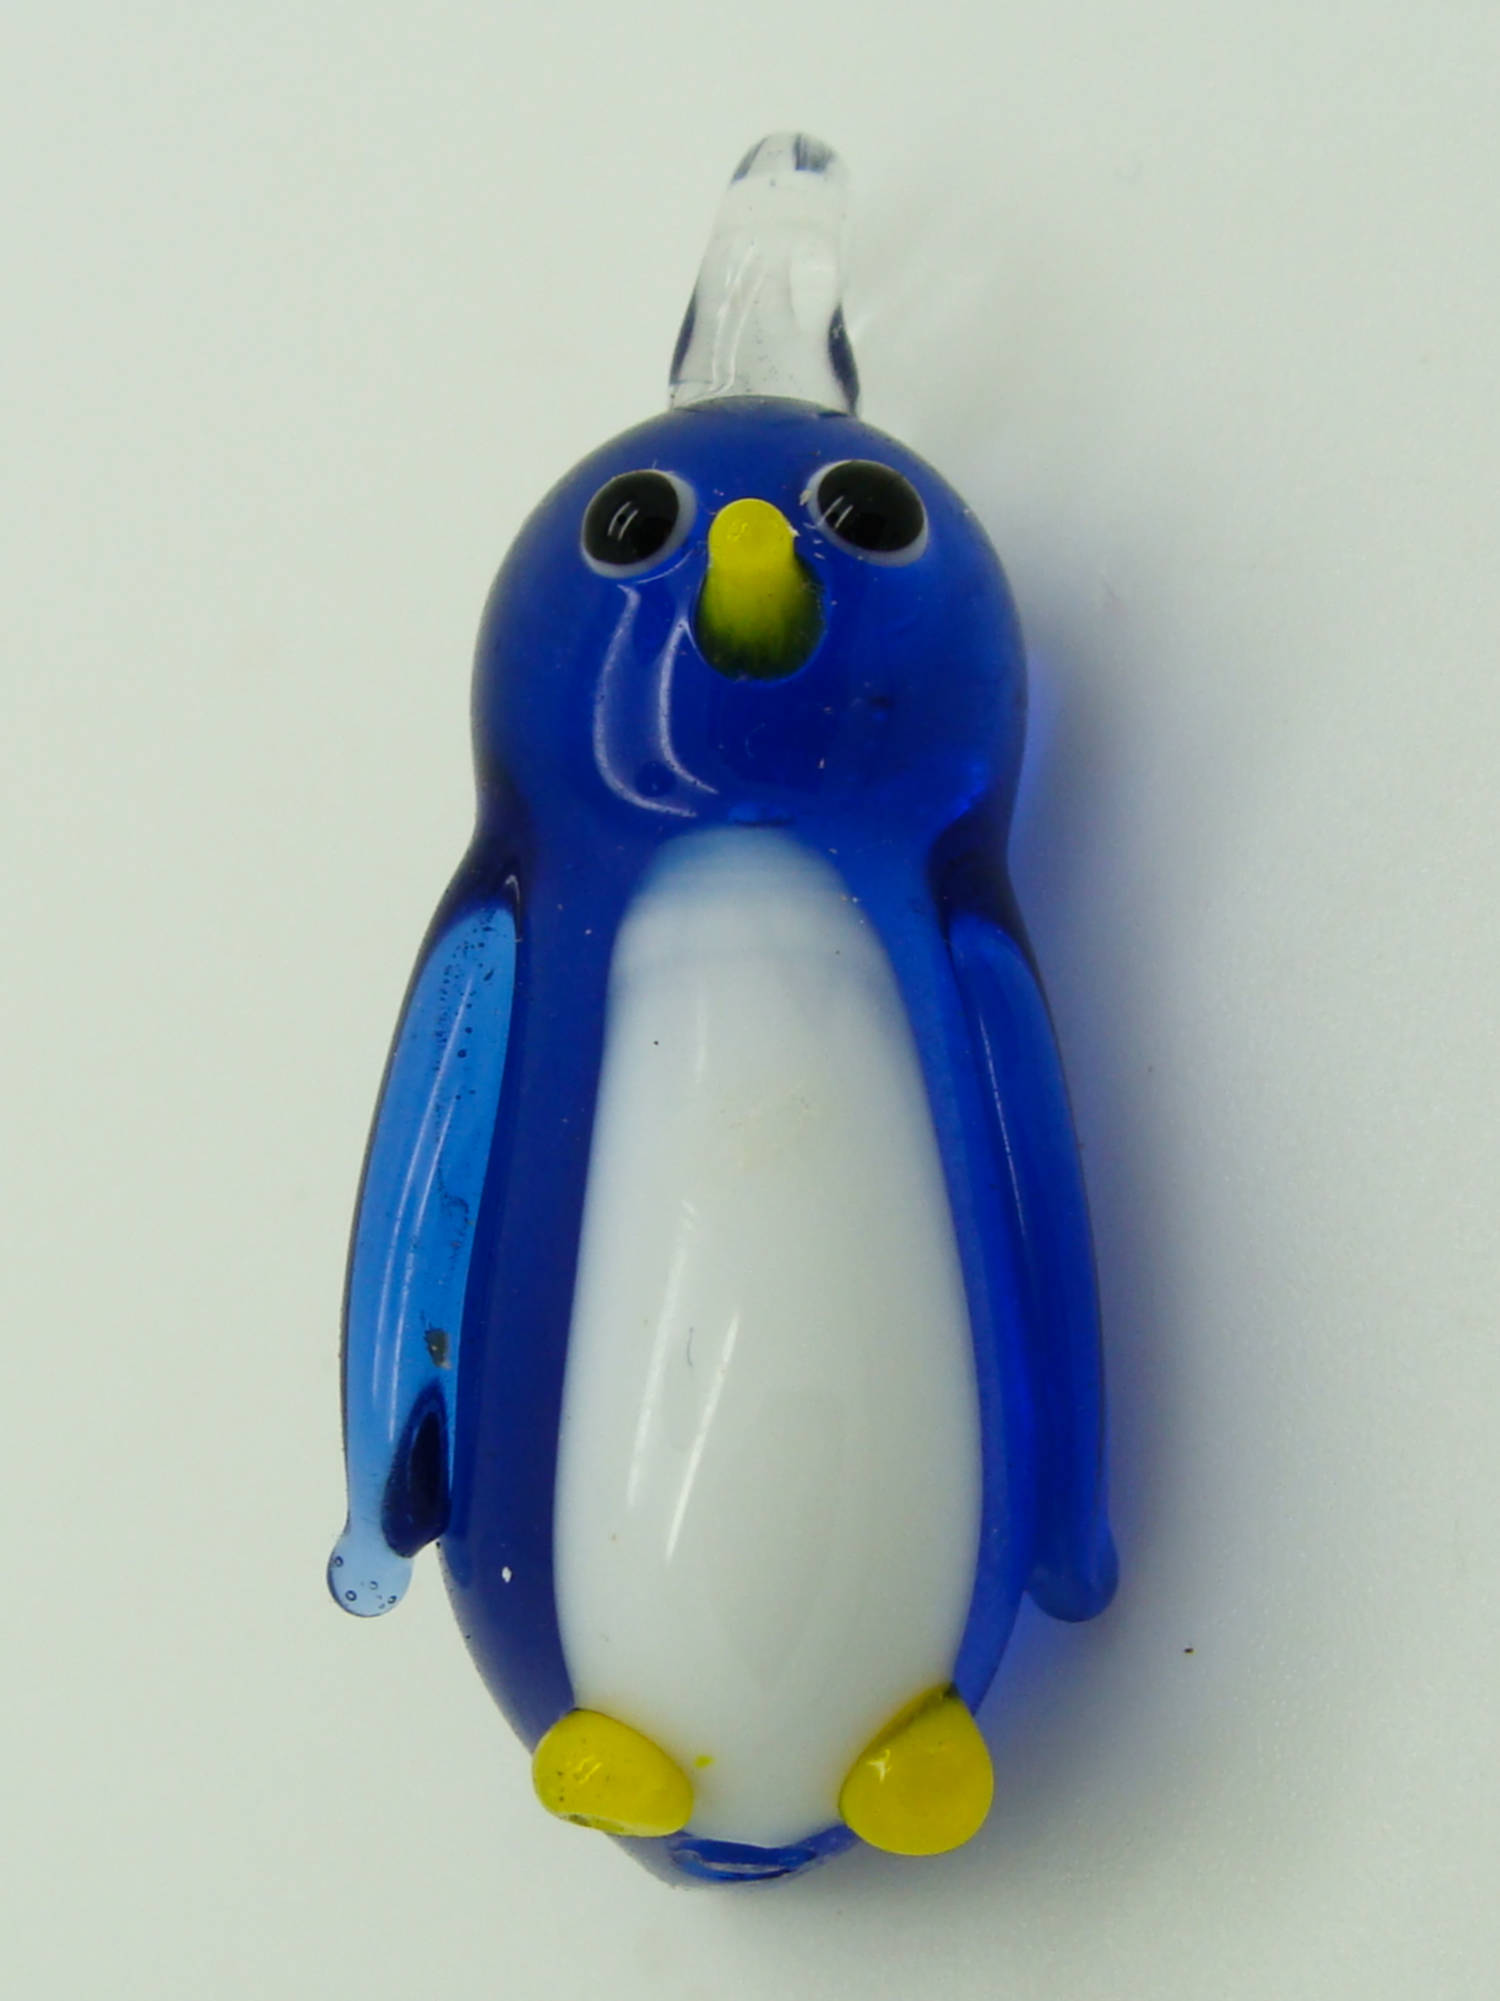 pendentif pingouin marine Pend-82